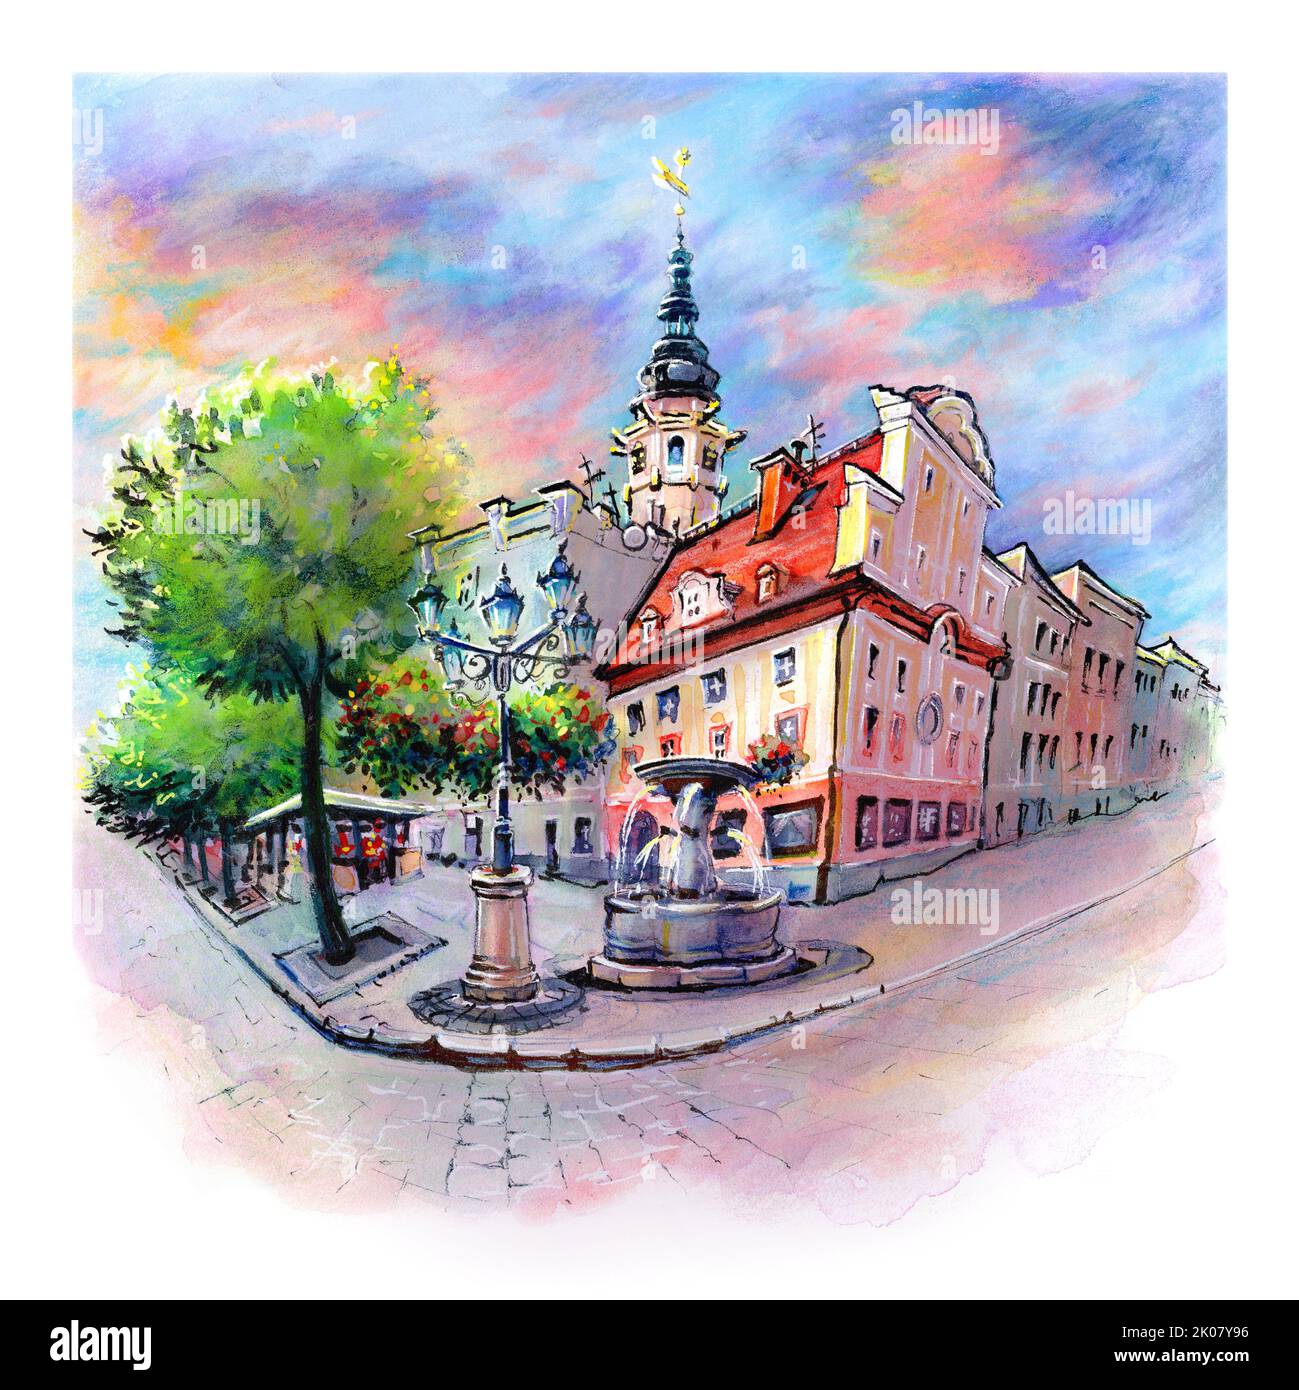 Watercolor sketch of Swidnica Market Square in the Old Town of Swidnica, Silesia, Poland. Stock Photo